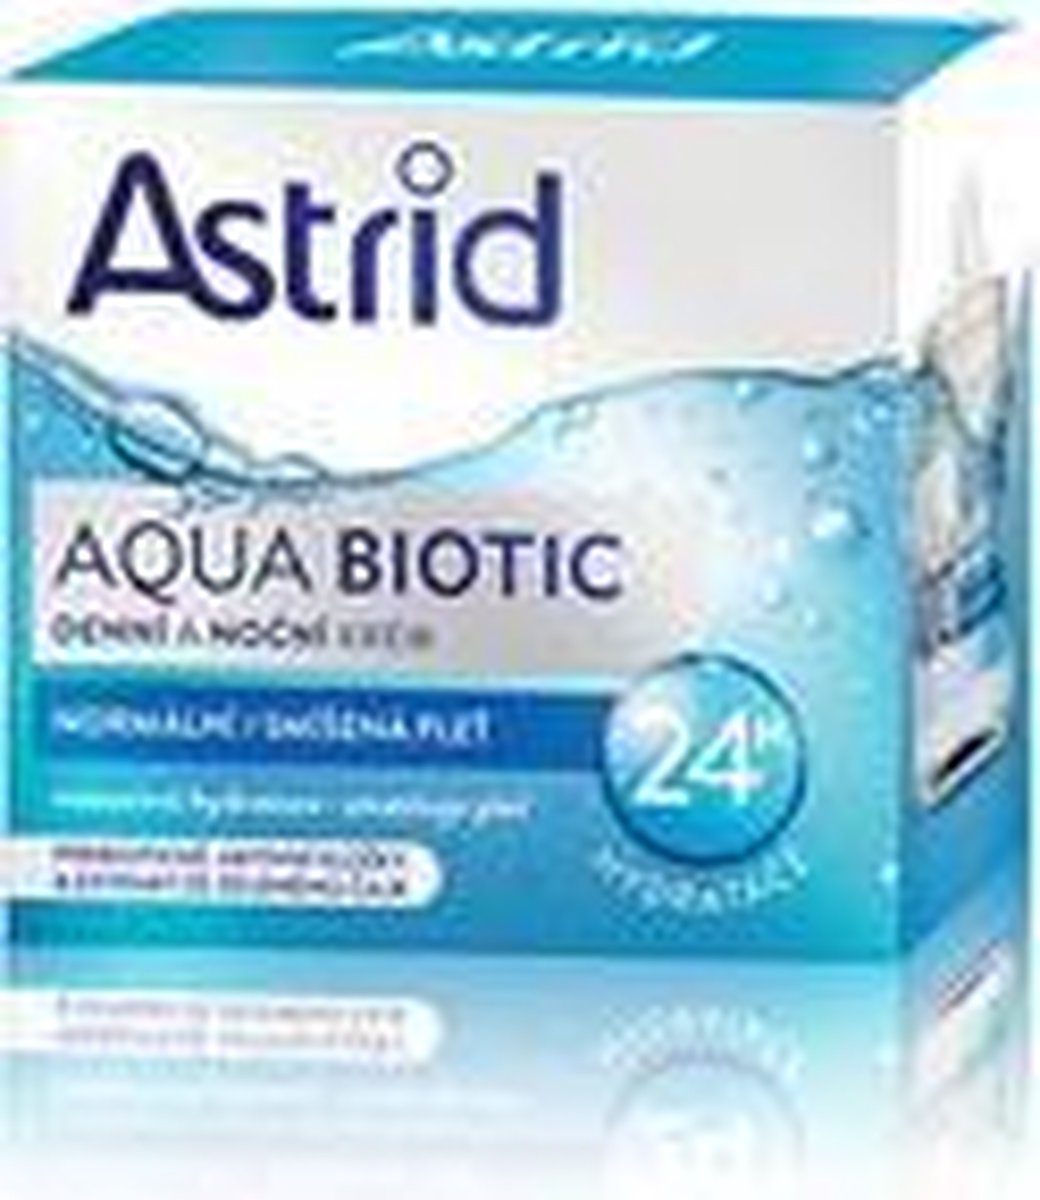 Astrid - Aqua Biotic Cream ( Normal And Mixed Skin ) - Day And Night Cream